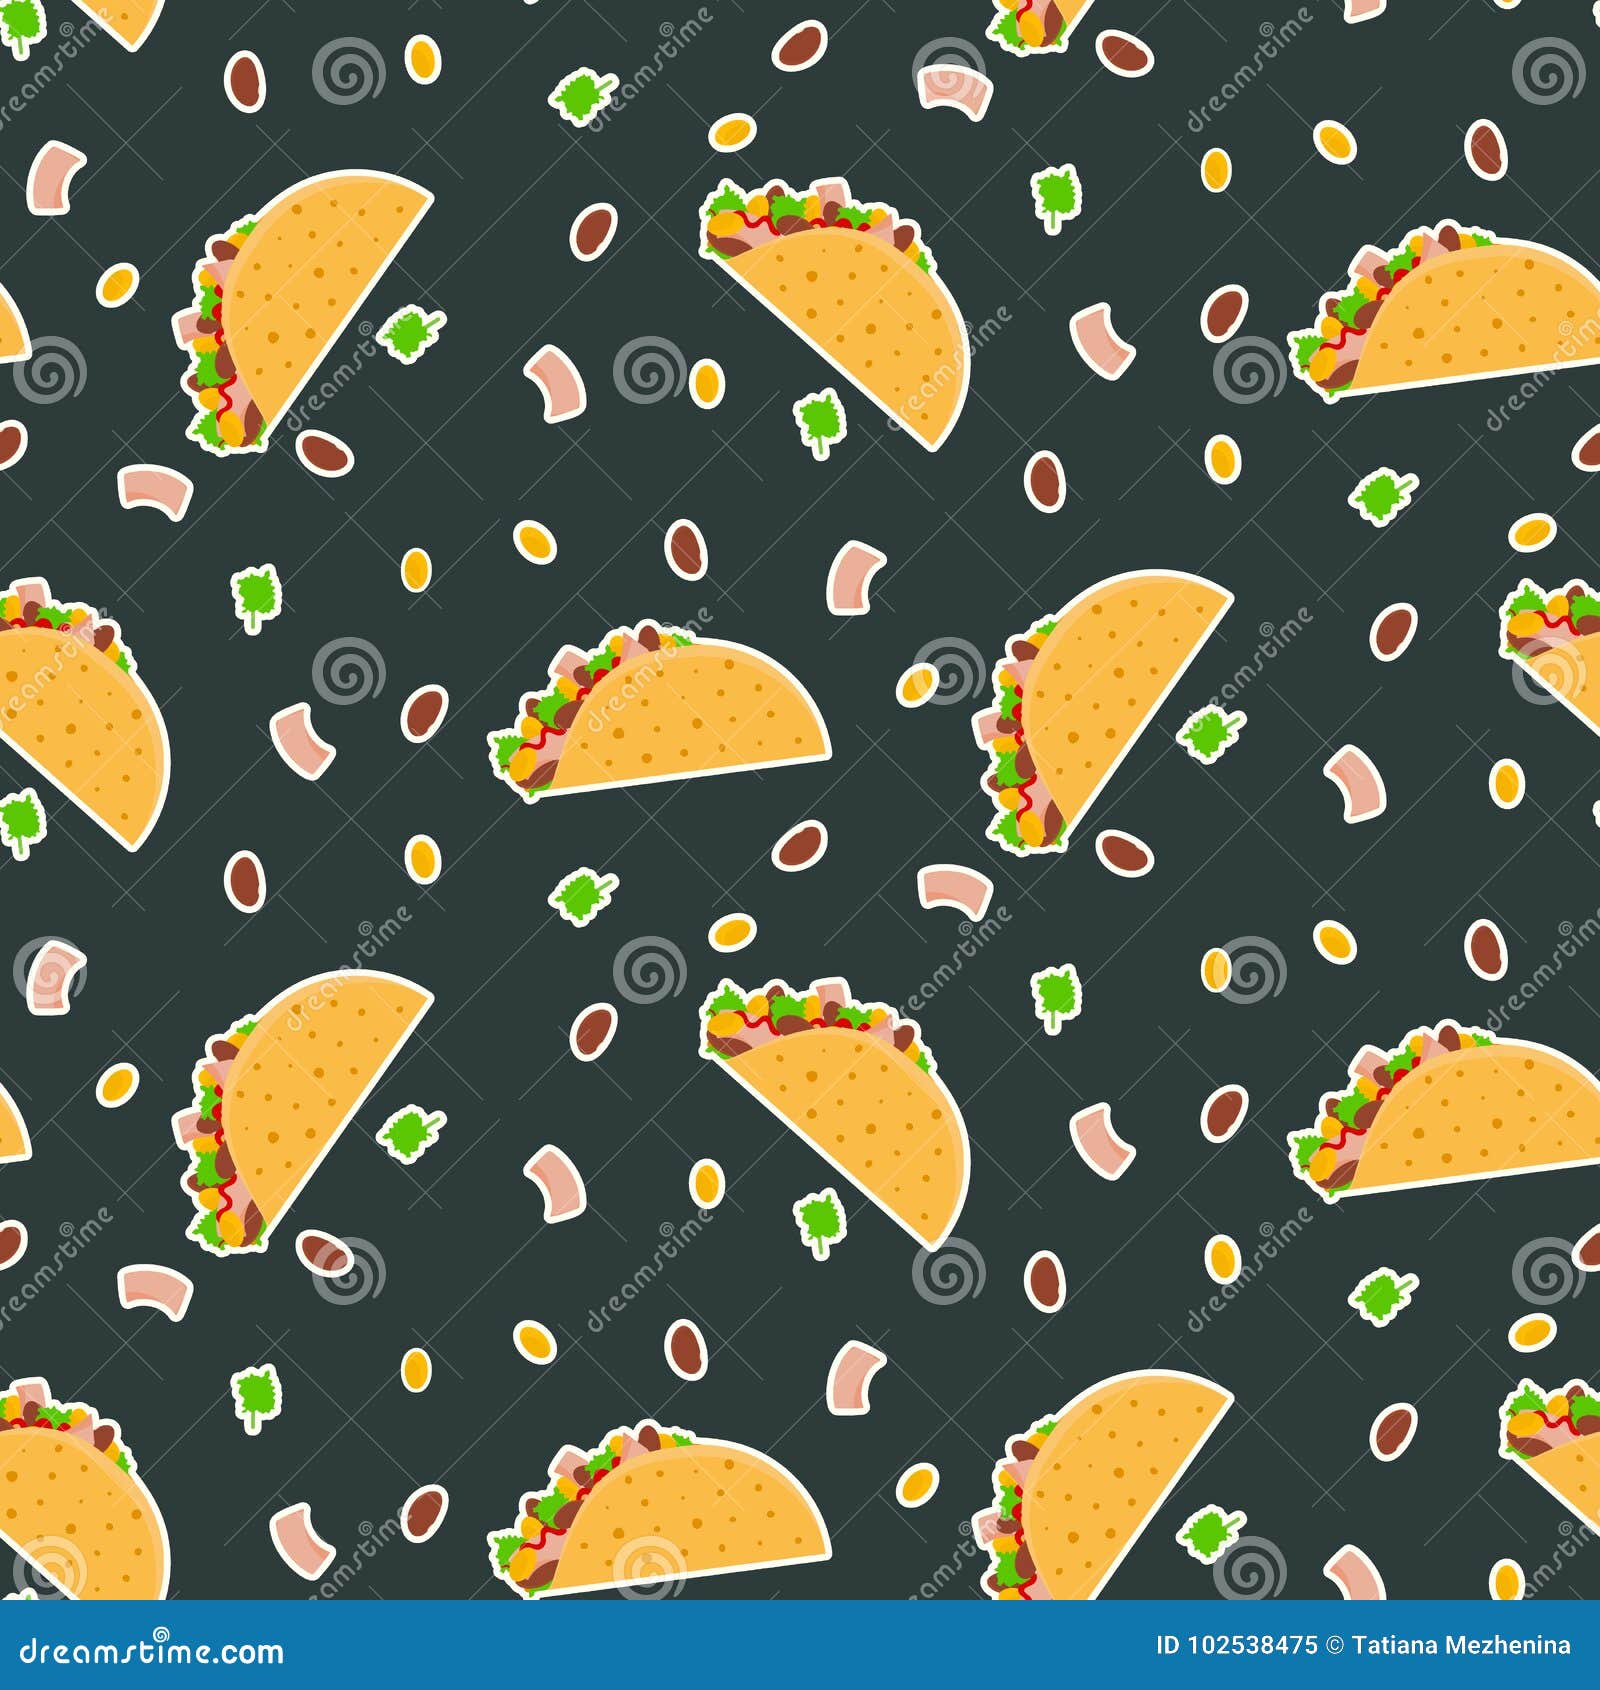 Cute Cartoon Contrast Vector Tacos Pattern on Dark Background Stock Vector  - Illustration of mexico, food: 102538475